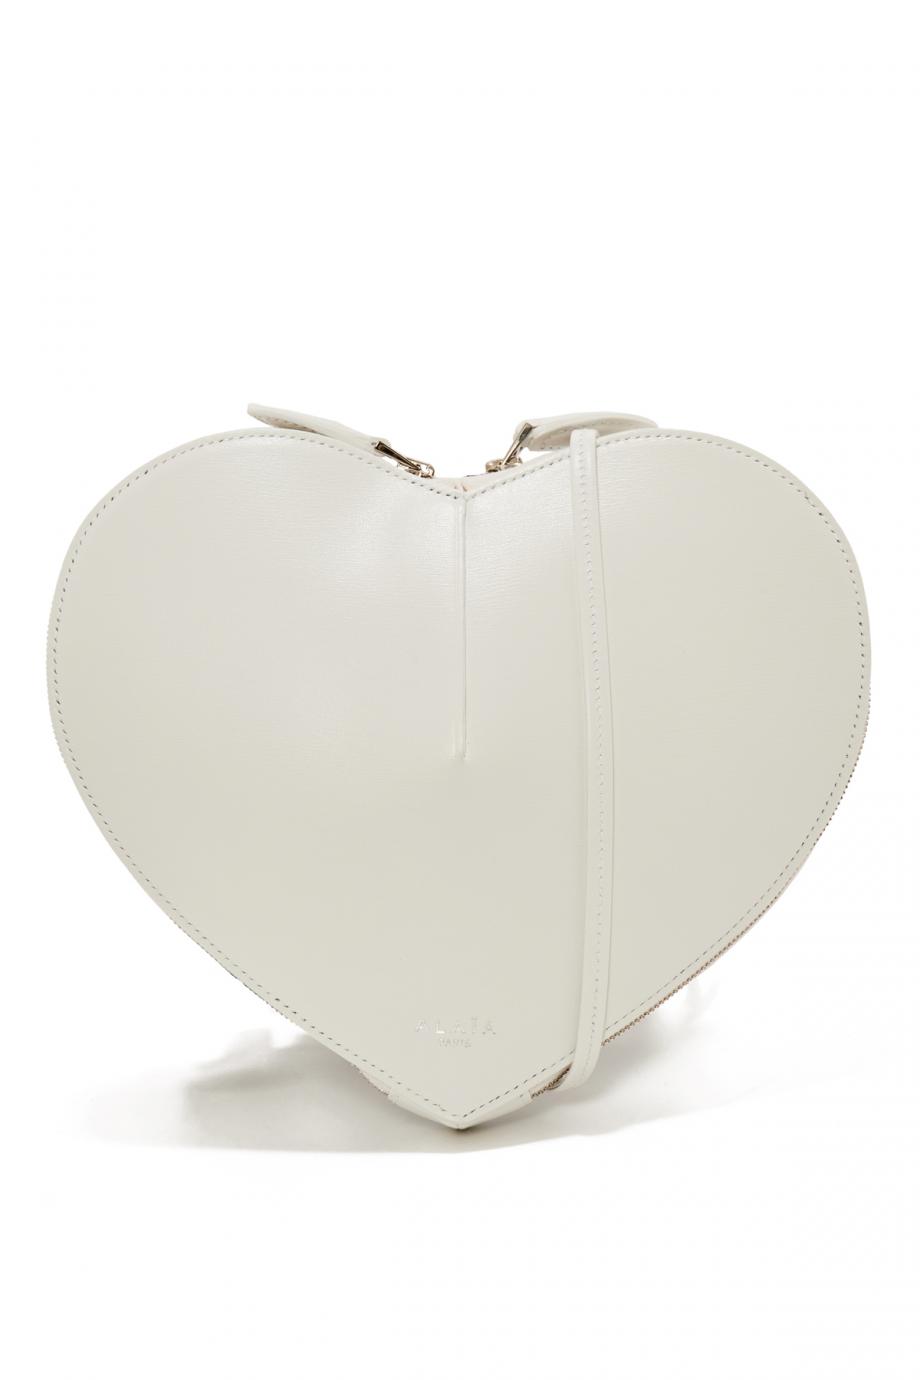 Le Coeur leather shoulder bag